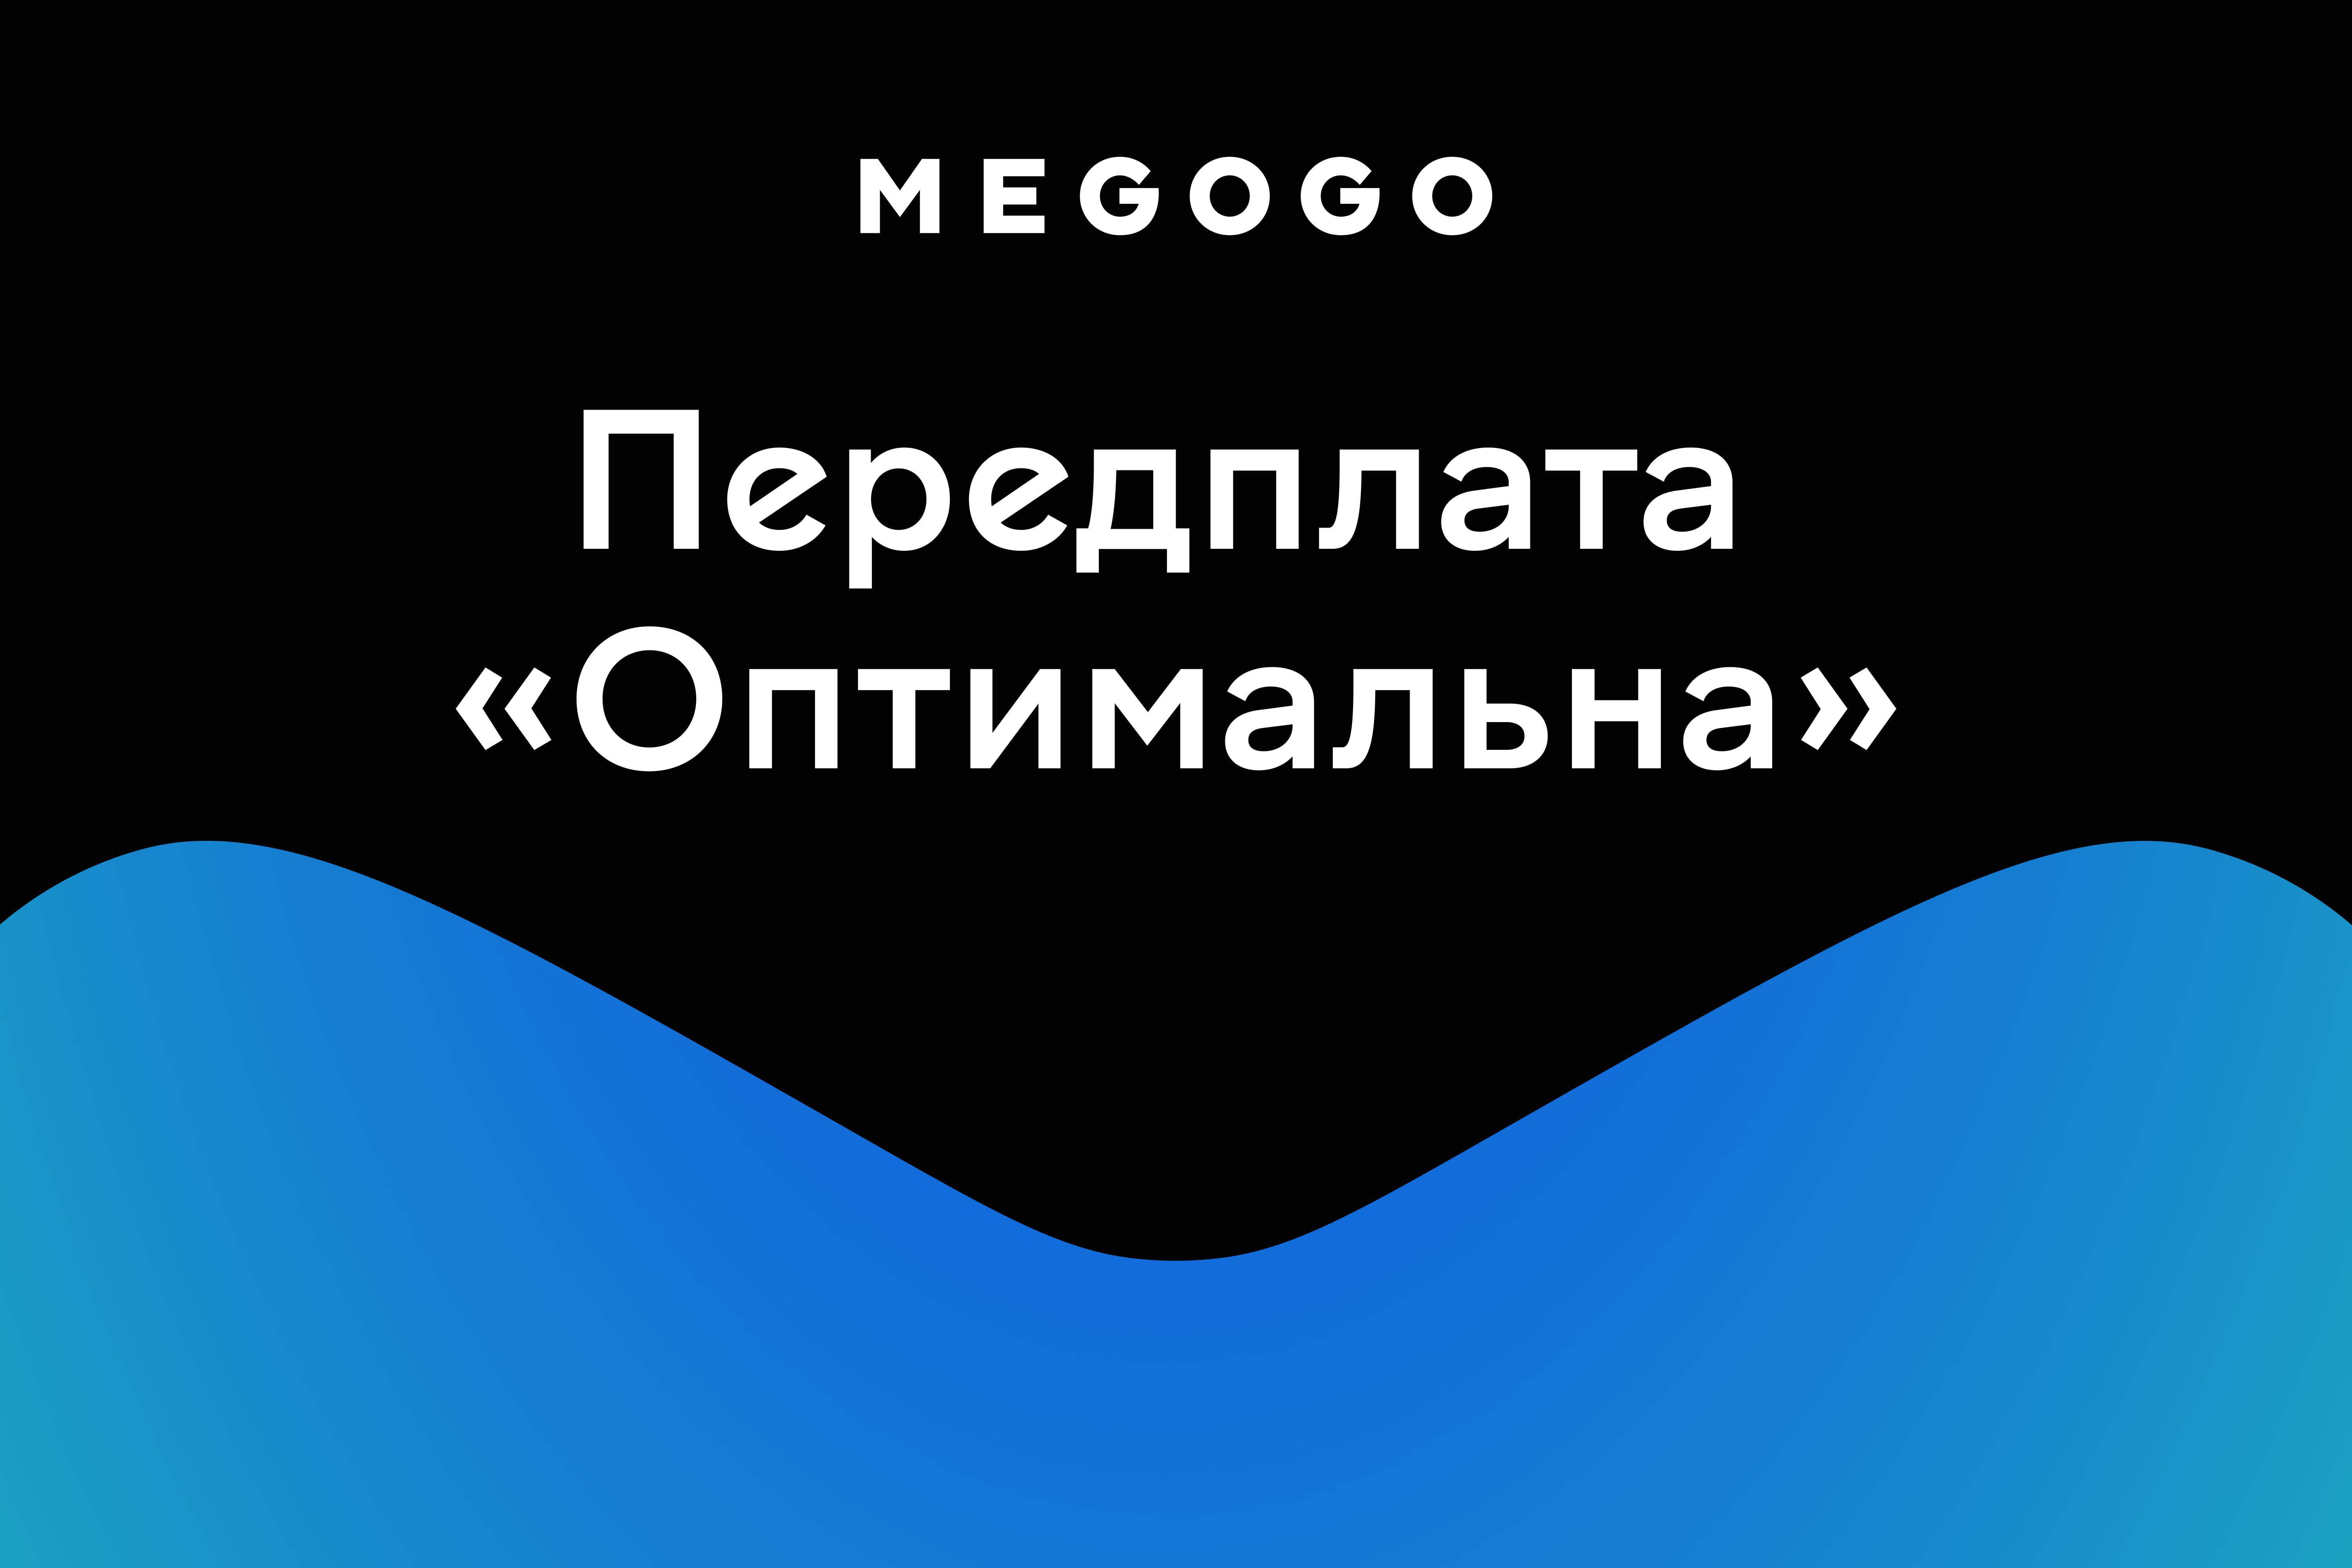 Subscription "Optimal" by MEGOGO